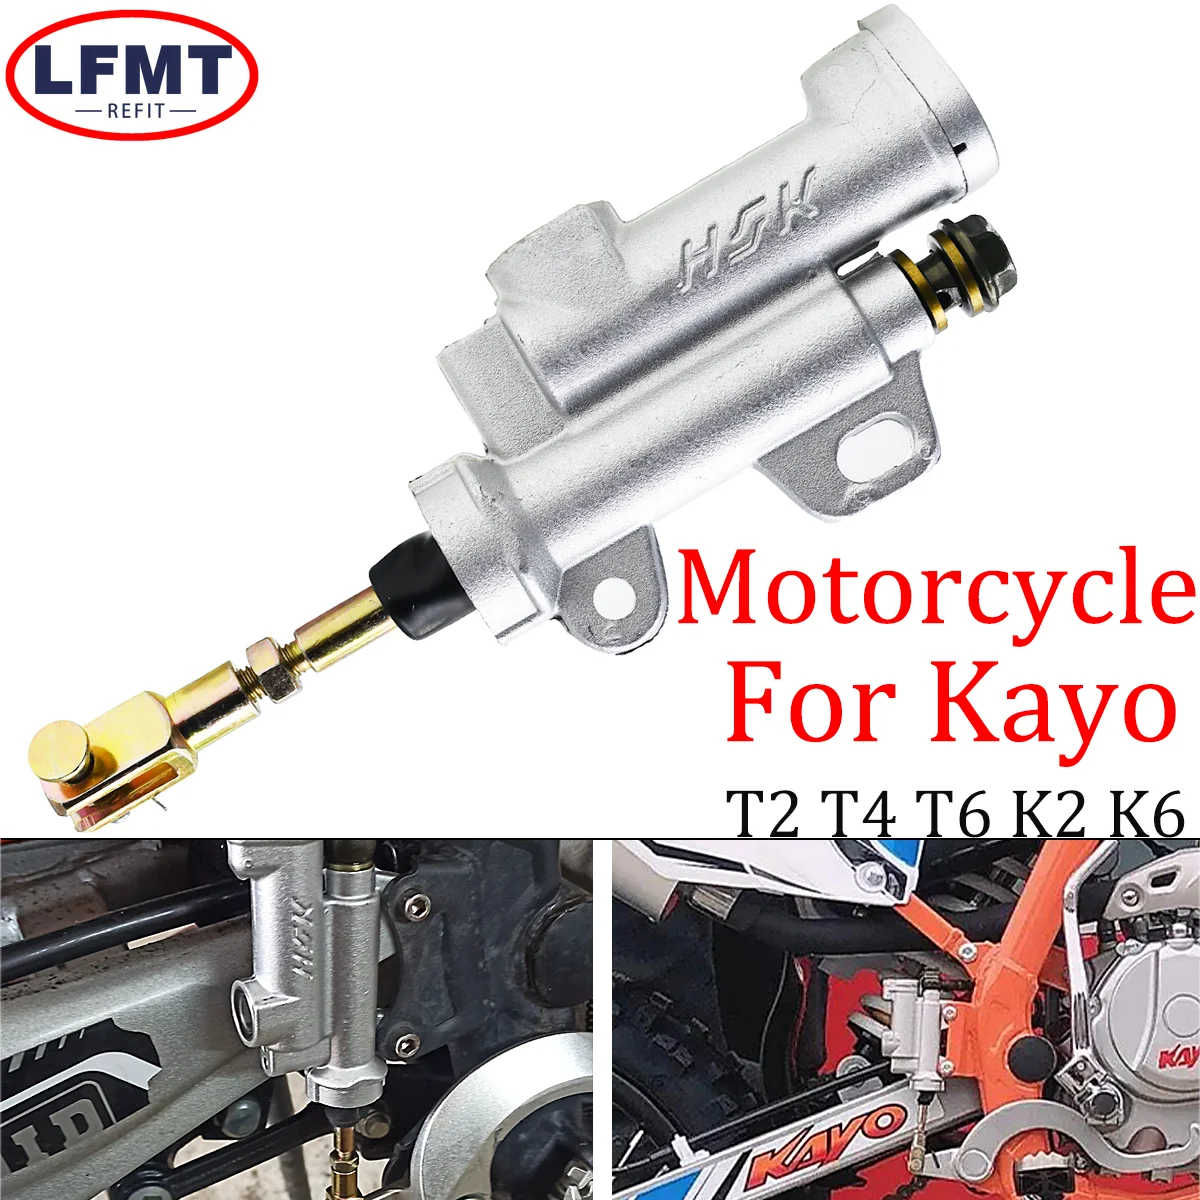 

Motorcycle Rear Hydraulic Brake Master Cylinder Pump For Kayo T4 T6 BSE 50cc 70cc 110cc 125cc 150cc 250cc ATV Pit Pro Dirt Bike